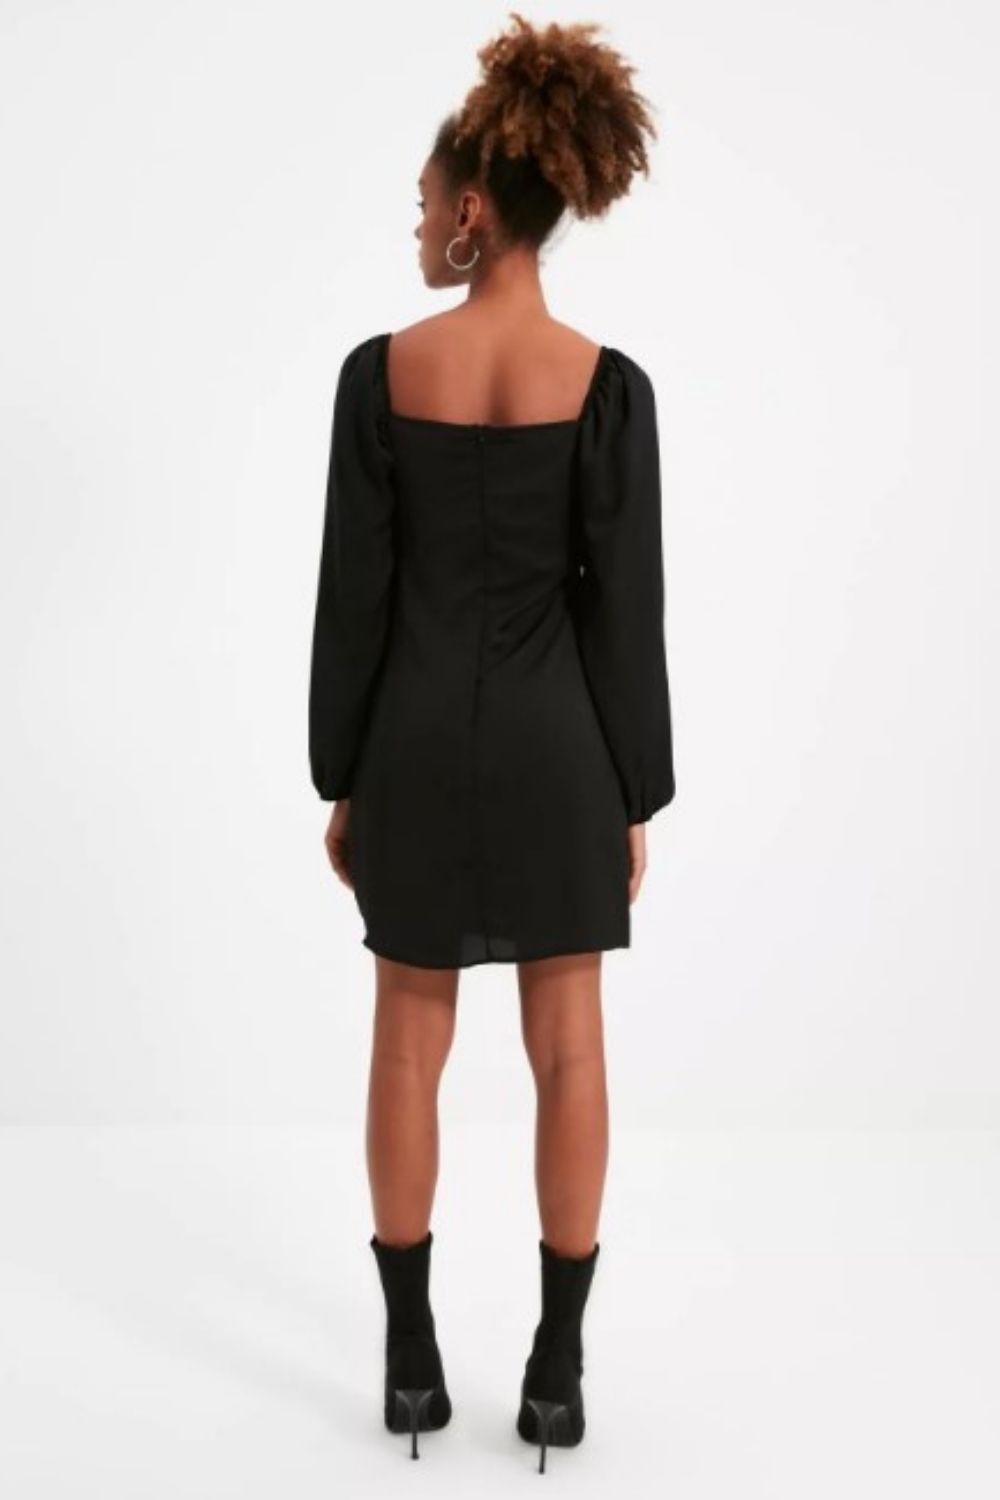 Hey Square Neckline Full Sleeve Black Dress – Styched Fashion